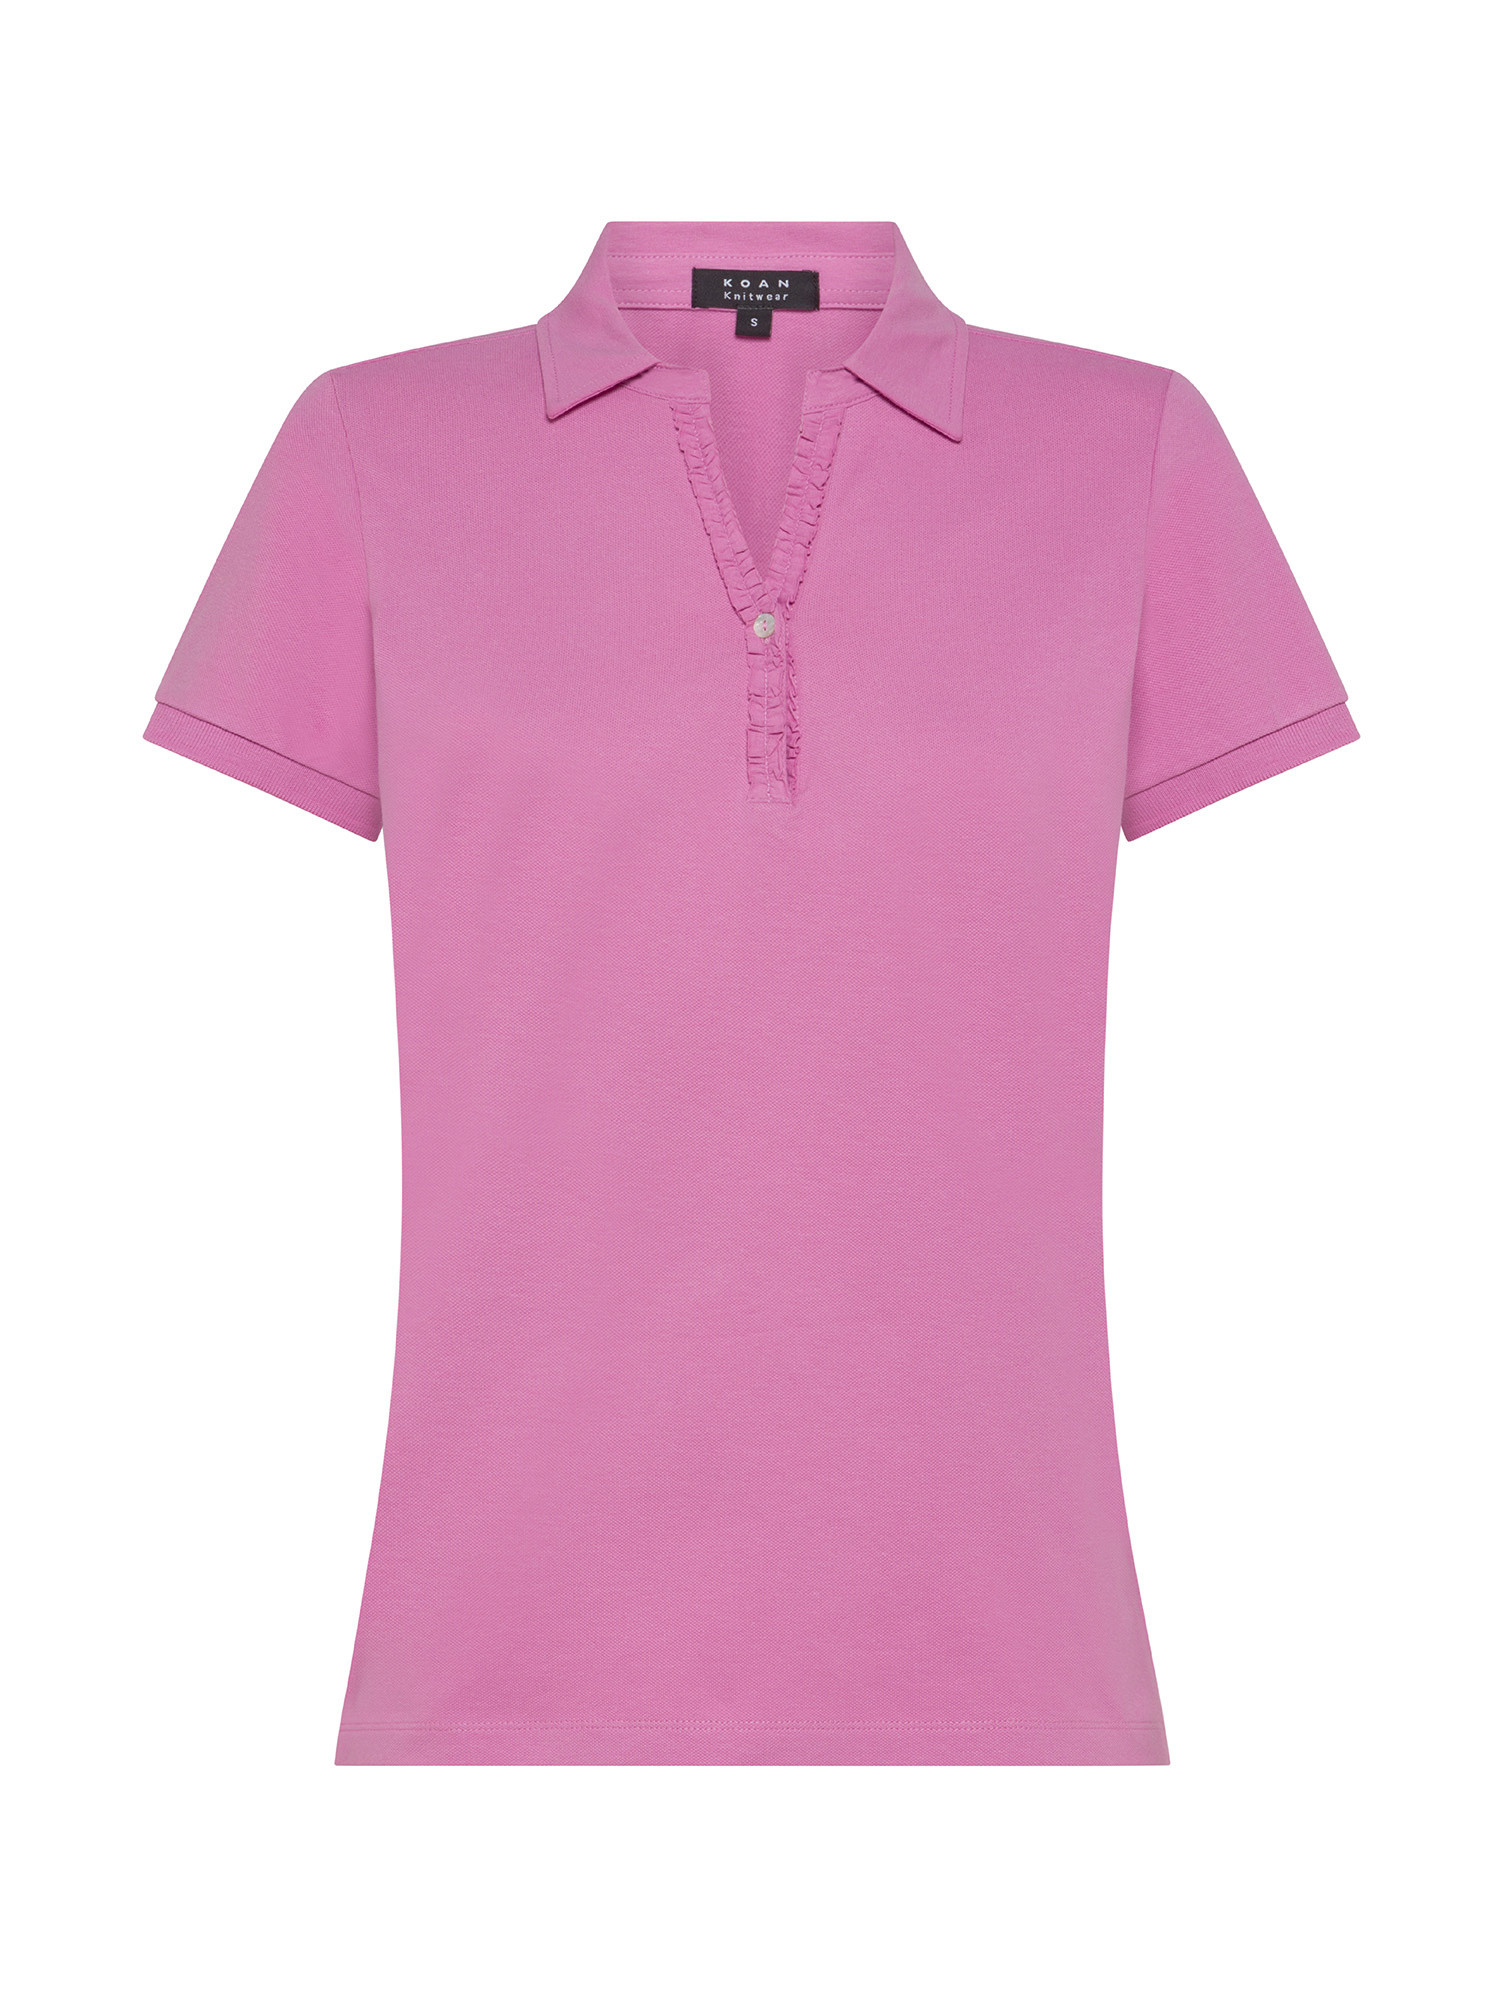 Koan - T-shirt with ruffles, Dark Pink, large image number 0